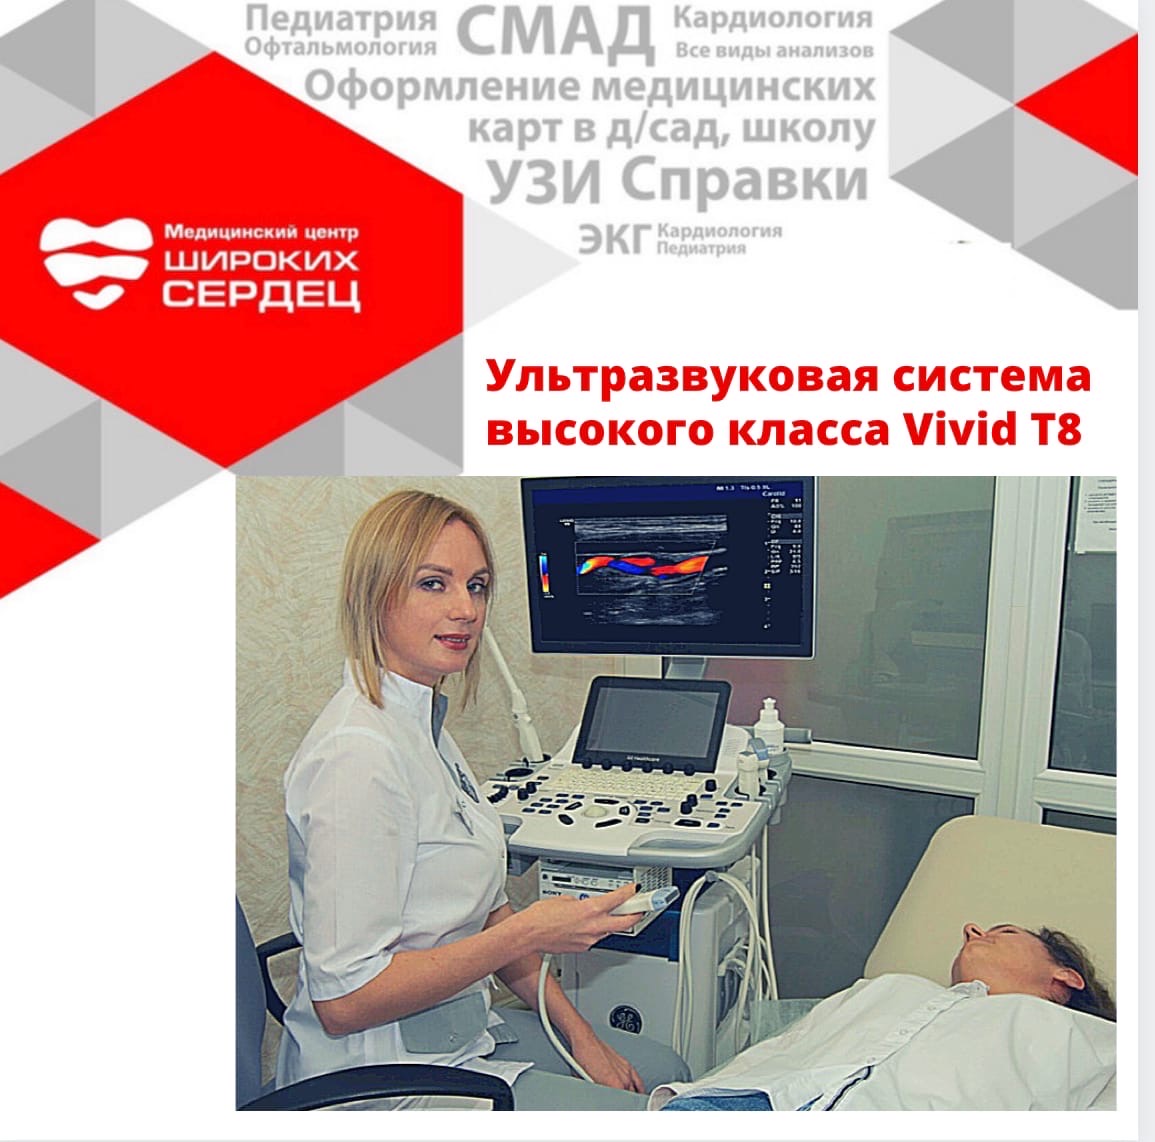 Широких сердец сайт. Медицинский центр широких сердец. Клиника широких сердец Воронеж. Медицинский центр широких сердец на пограничной.